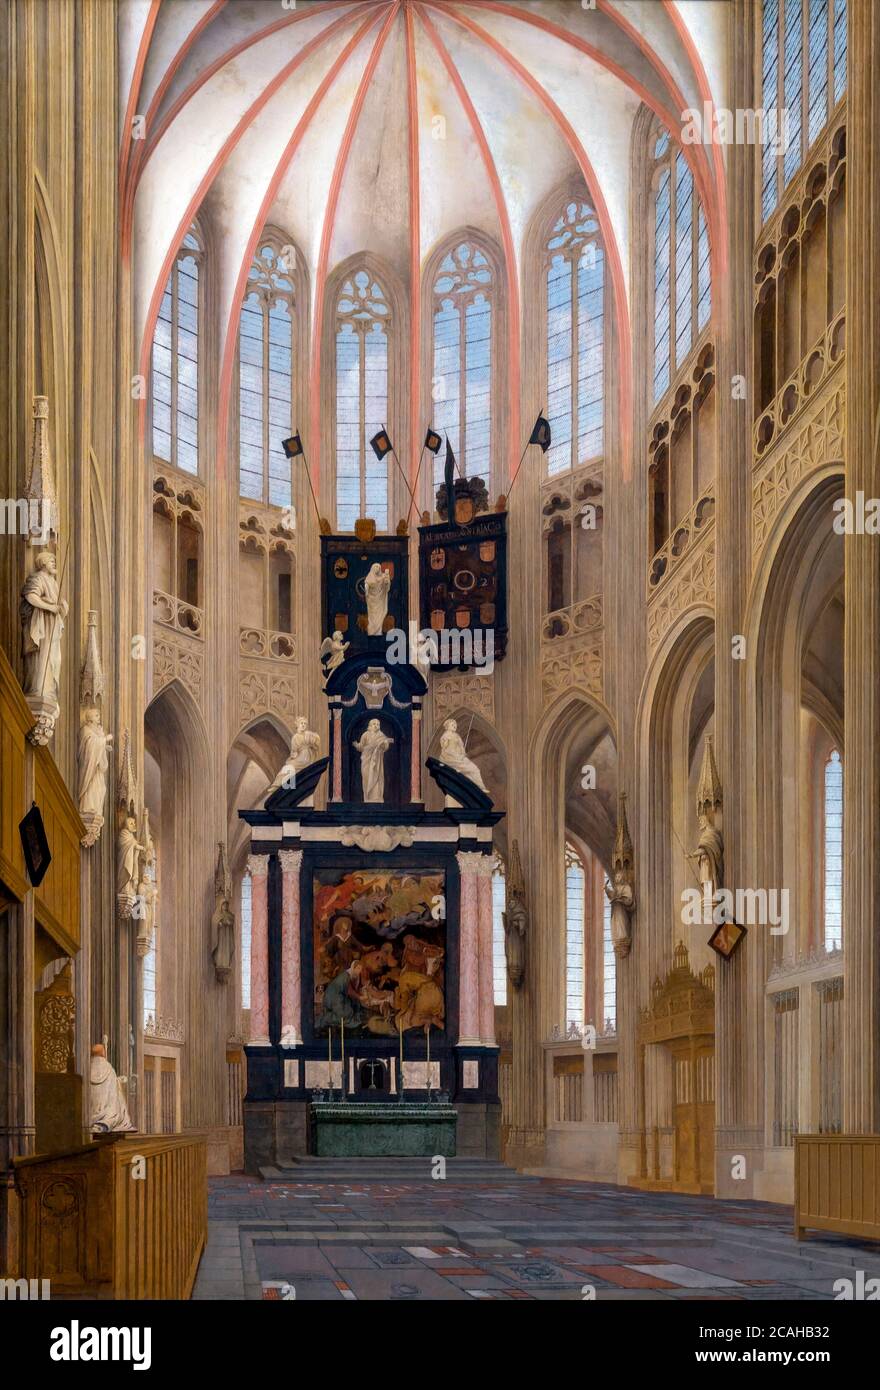 Cathedral of Saint John at 's-Hertogenbosch, Pieter Jansz. Saenredam,  1646, National Gallery of Art, Washington DC, USA, North America Stock Photo